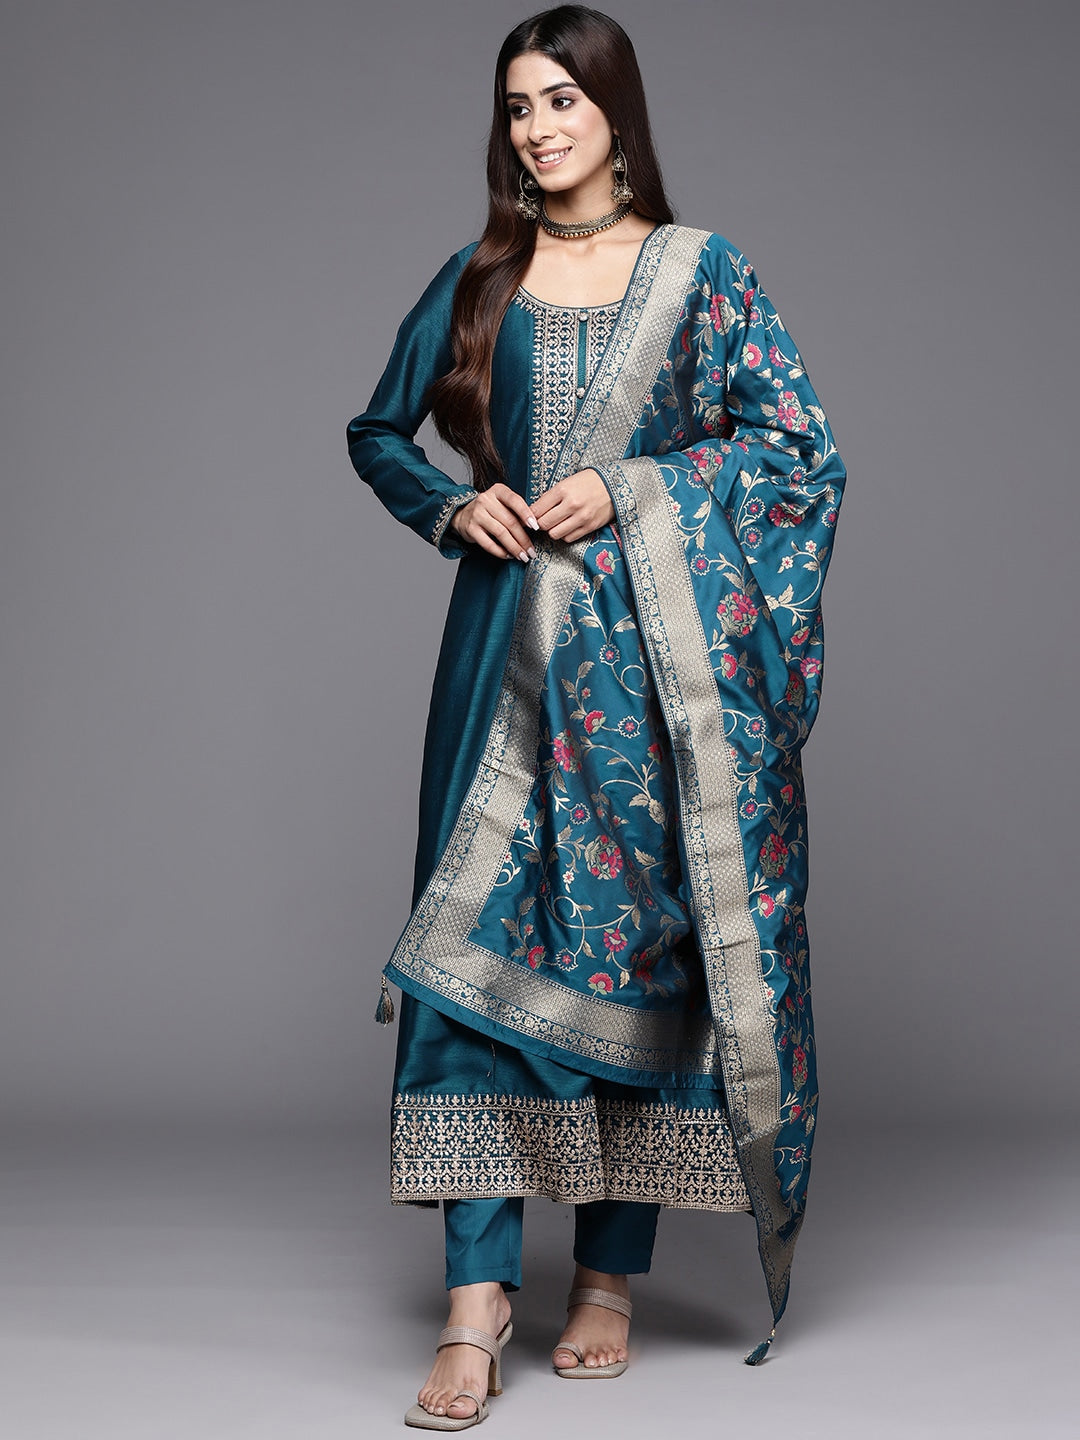 anubhutee Women's Cotton Sky Blue Gota Patti work Solid Straight Kurta Suit  Set with Trousers : Amazon.in: Fashion